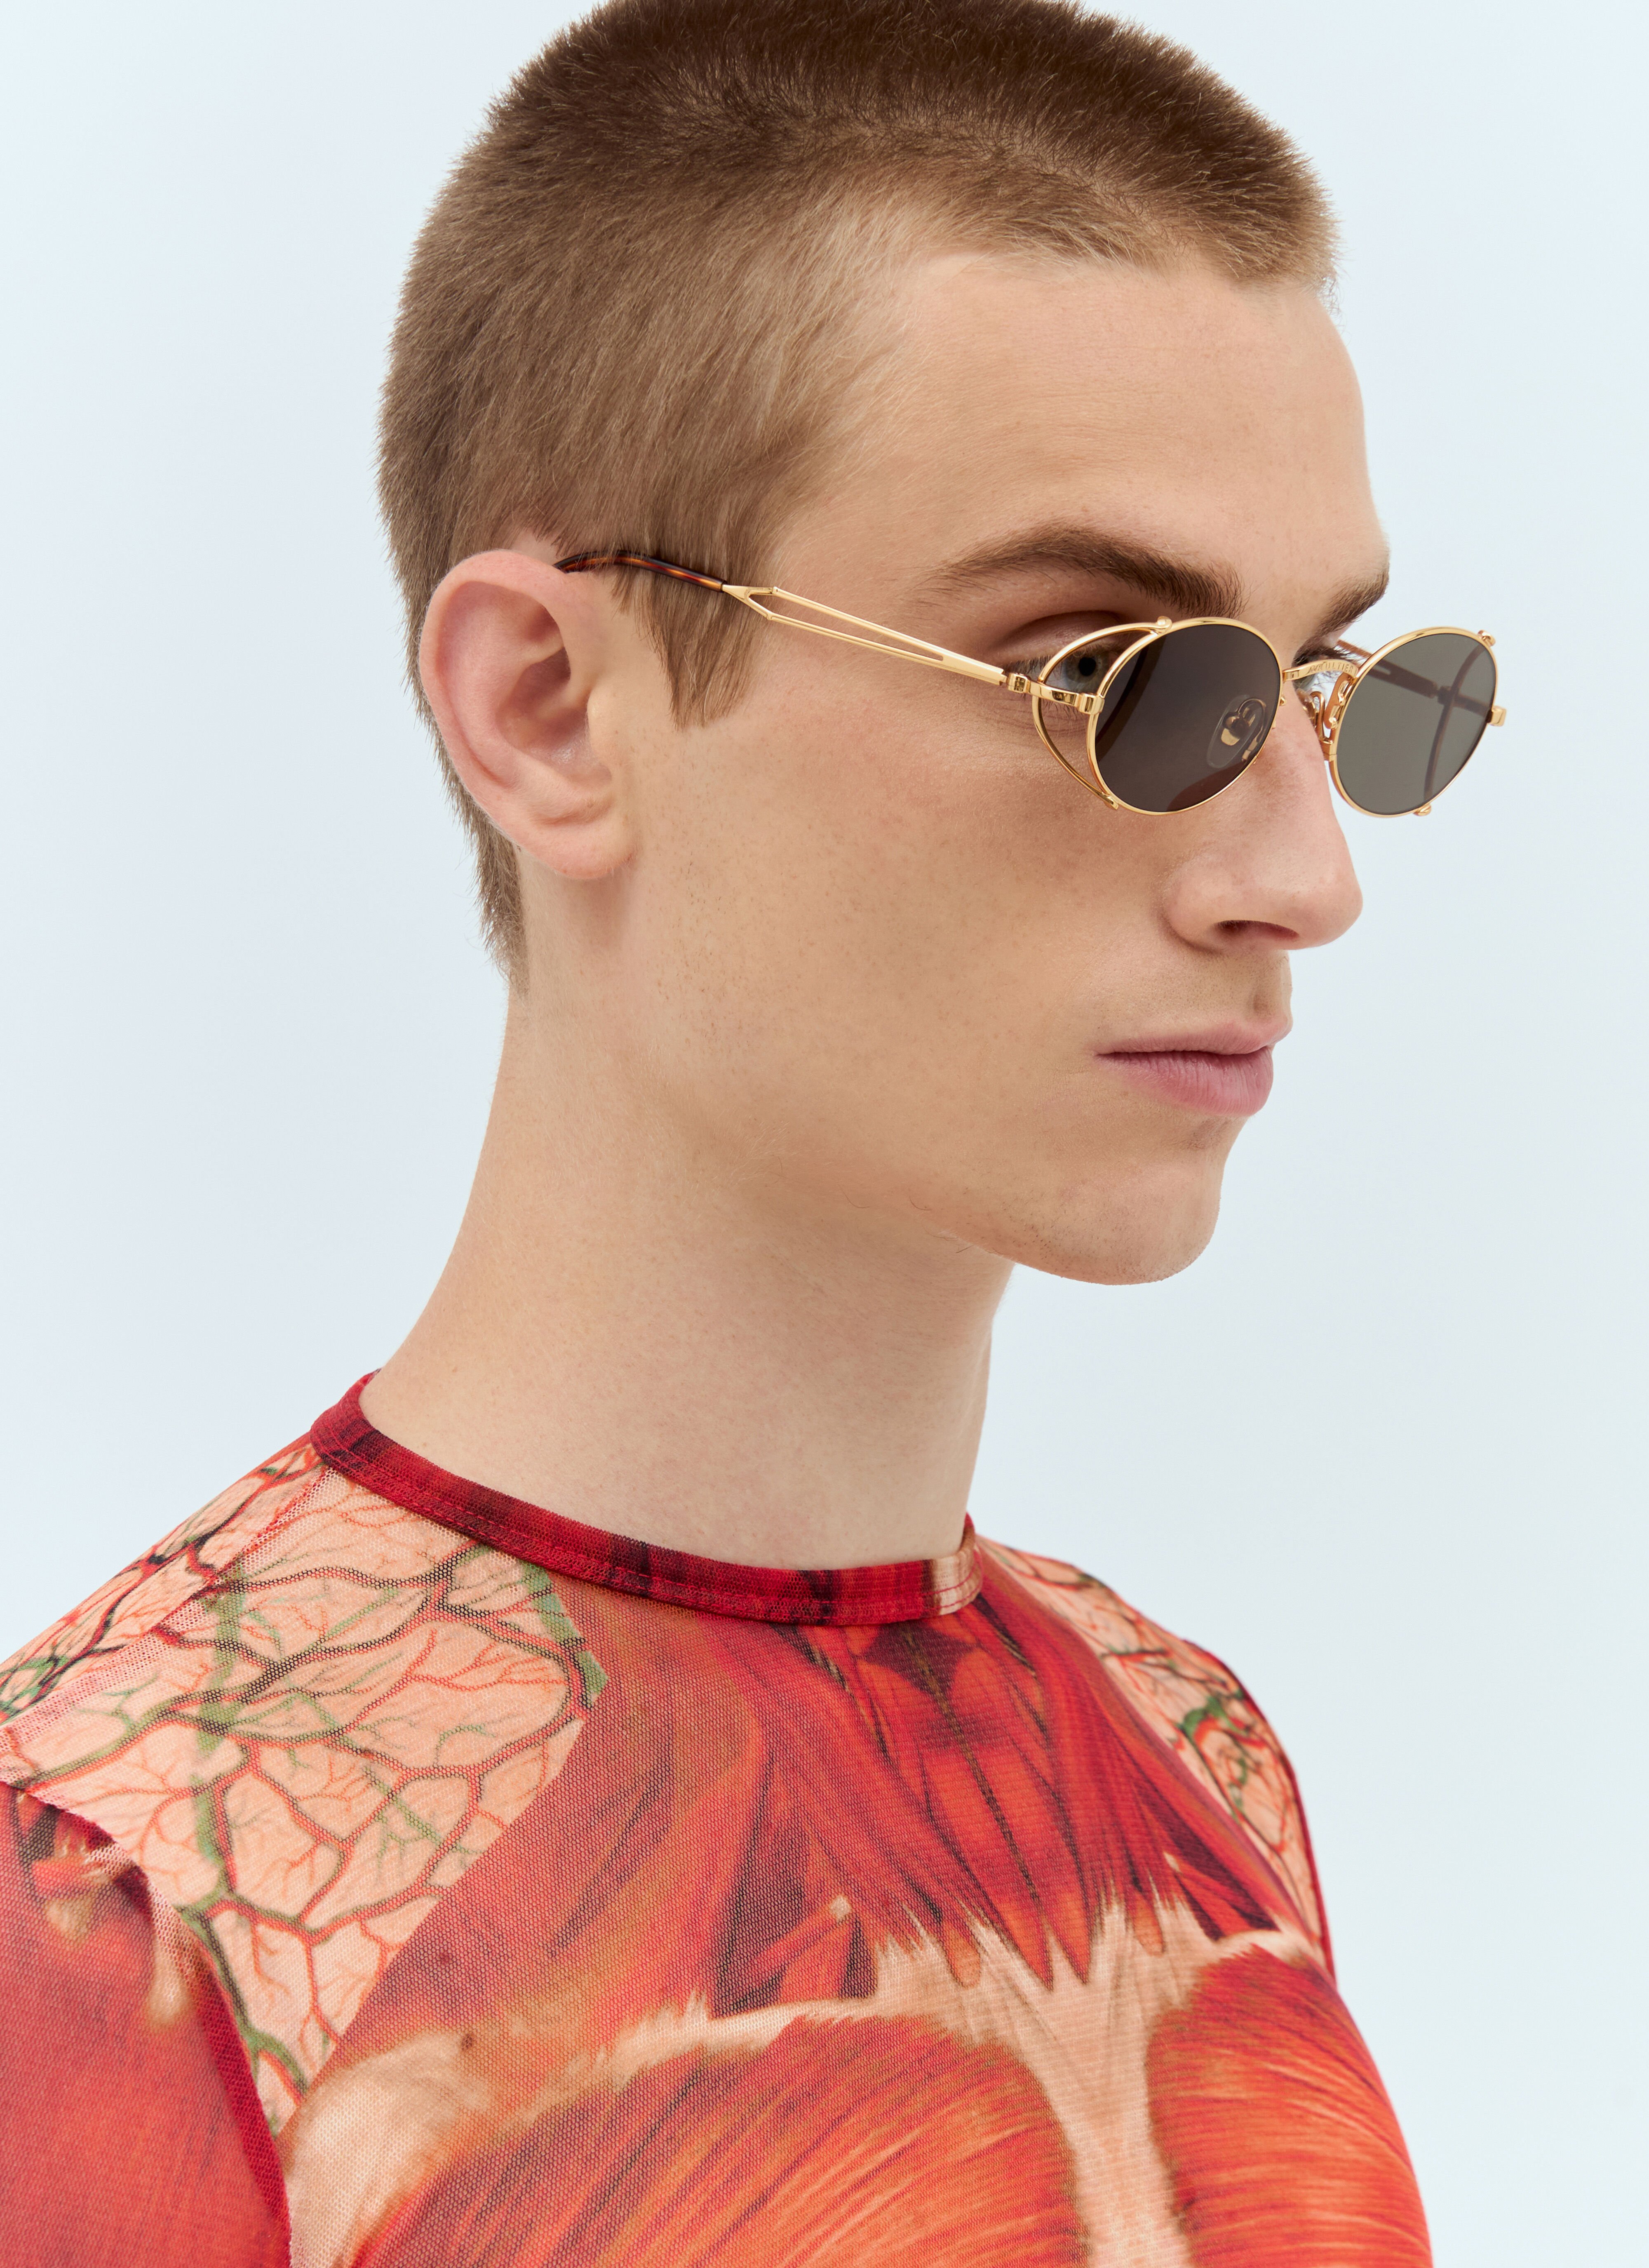 Jean Paul Gaultier The 55-3175 Sunglasses Red jpg0157001